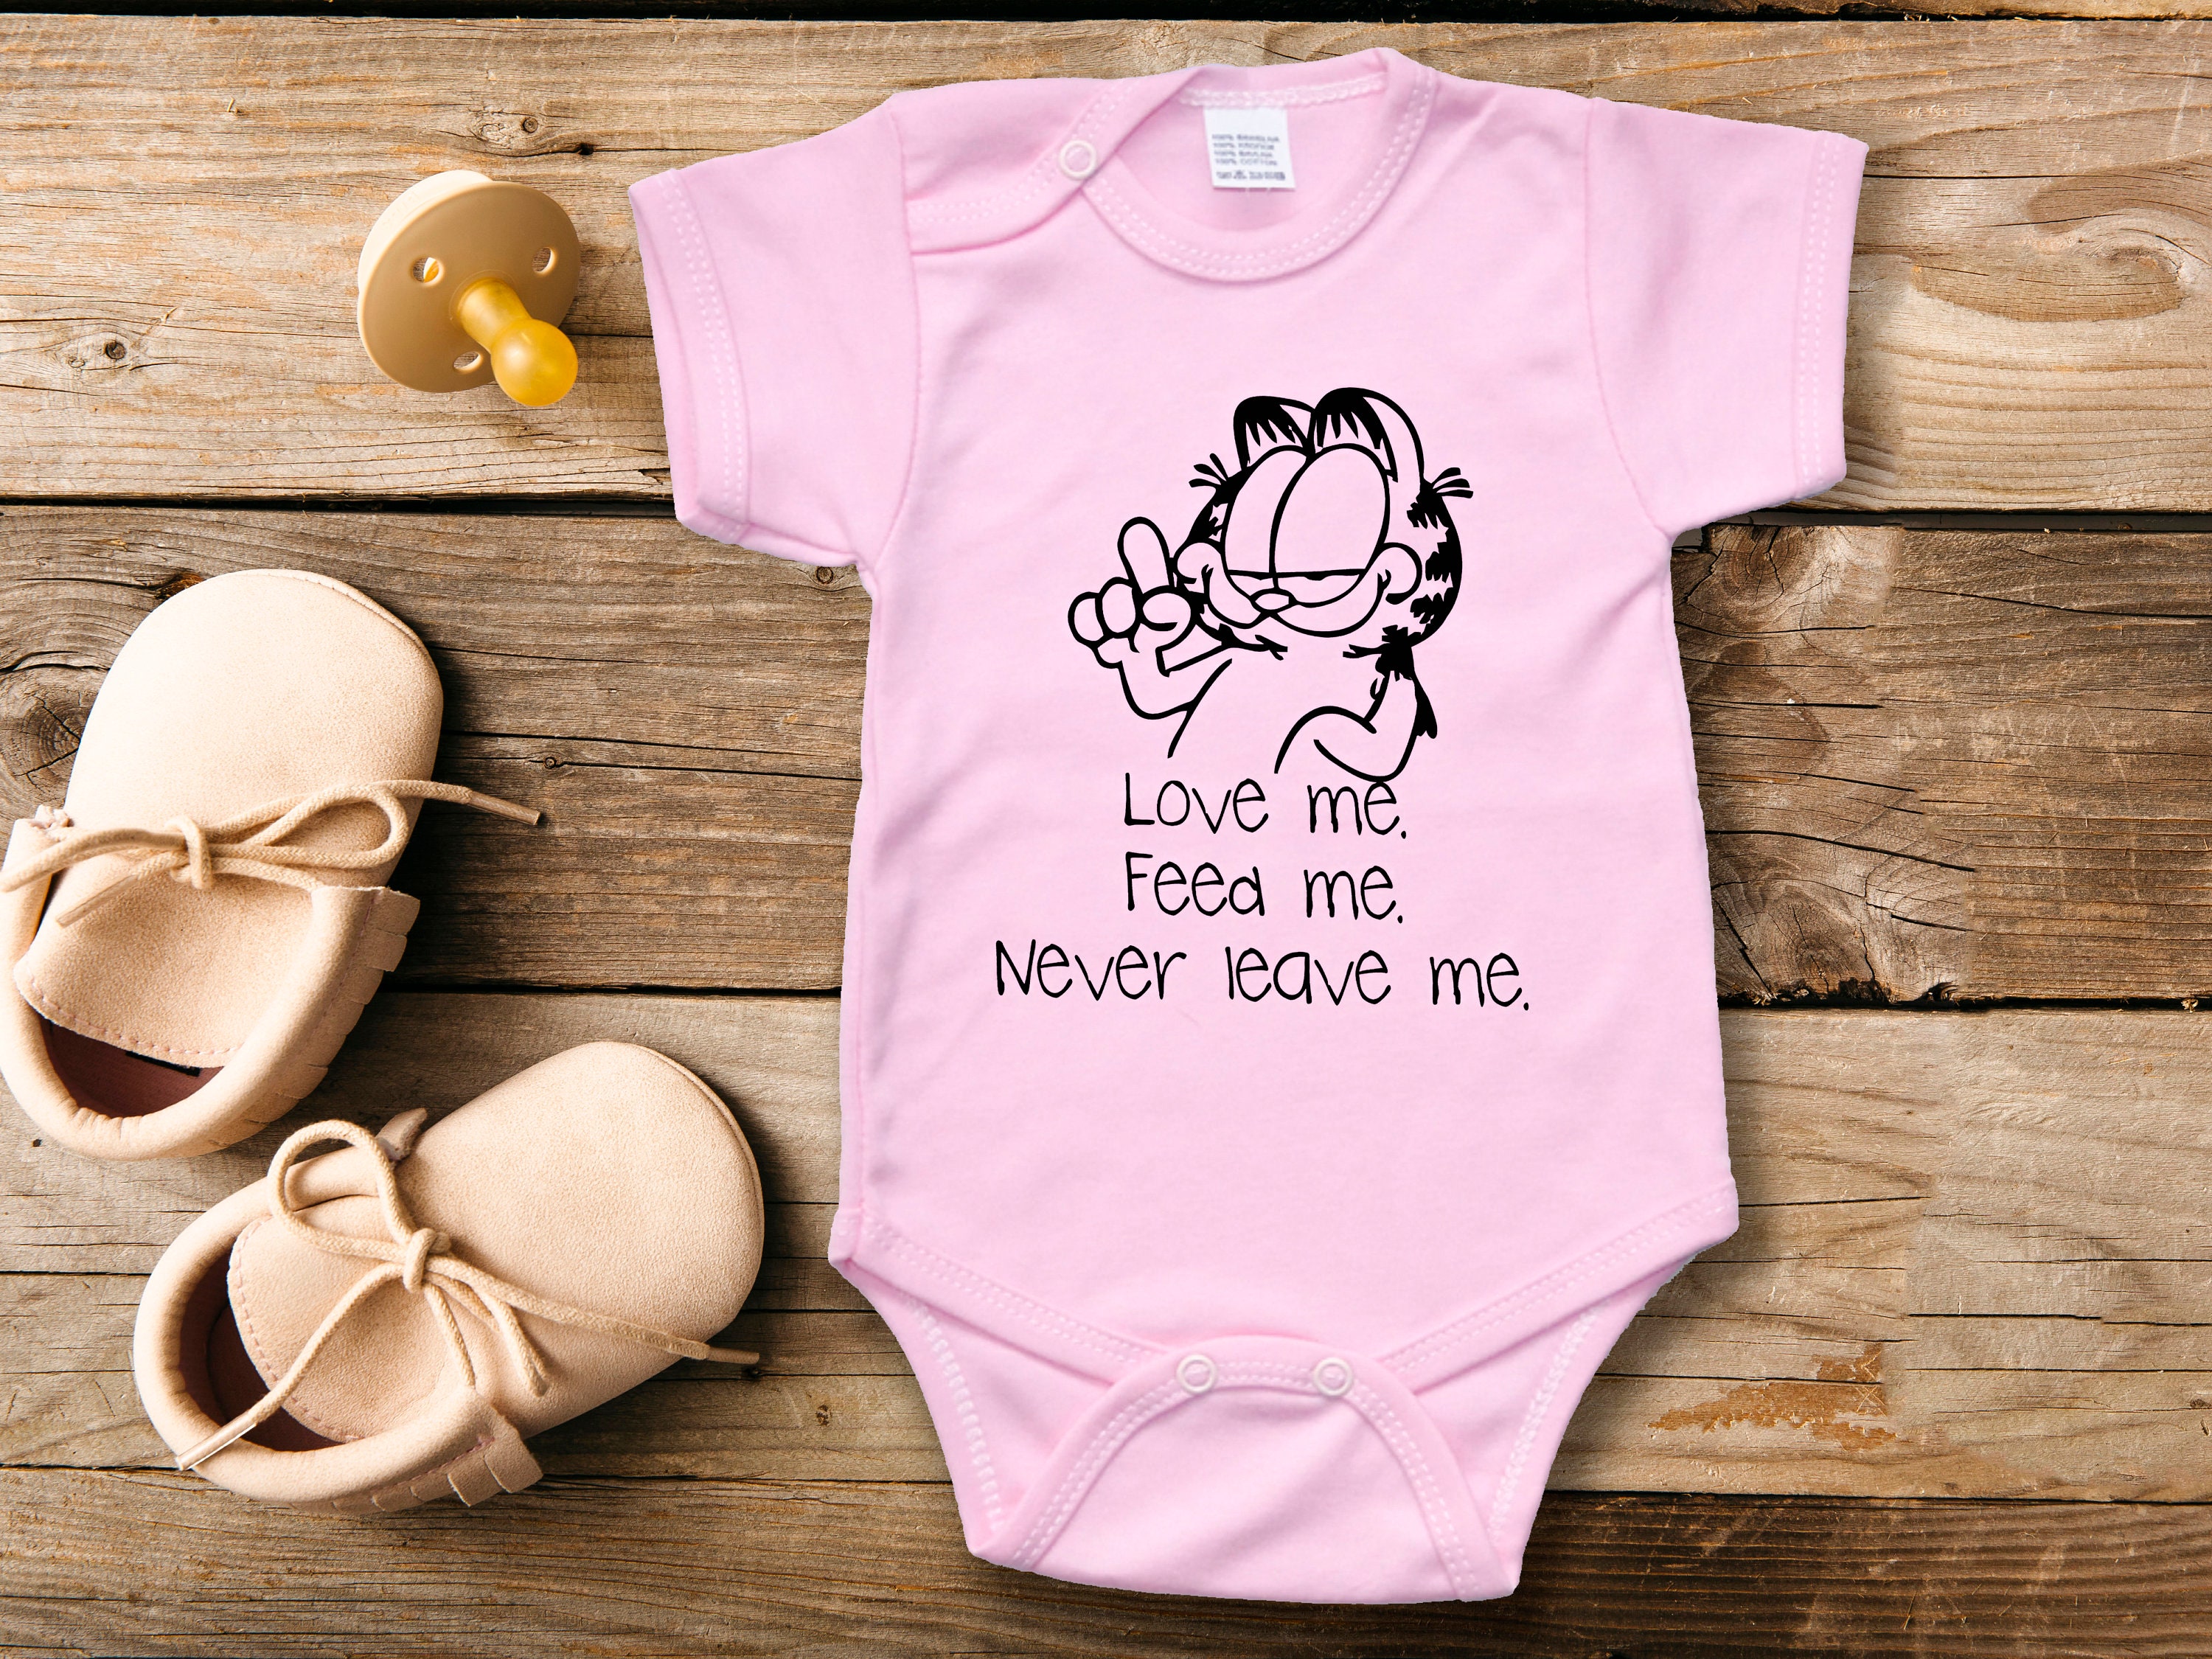 Cat Baby grow Pink romper sleep suit girls Cotton Hat animal Novelty Newborn UK 